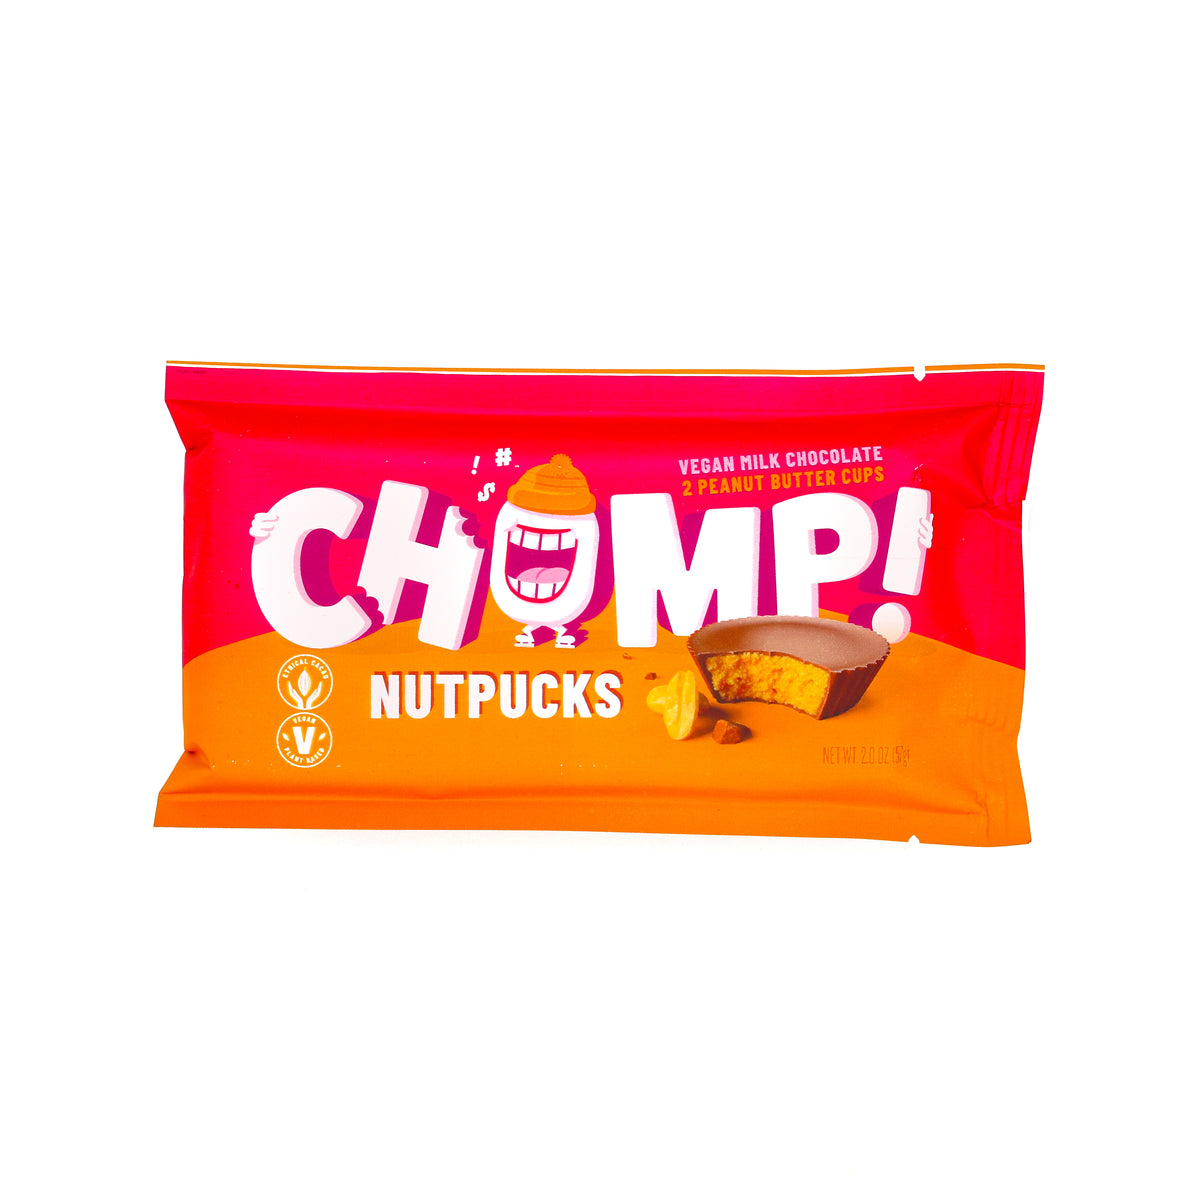 Chomp Nutpucks